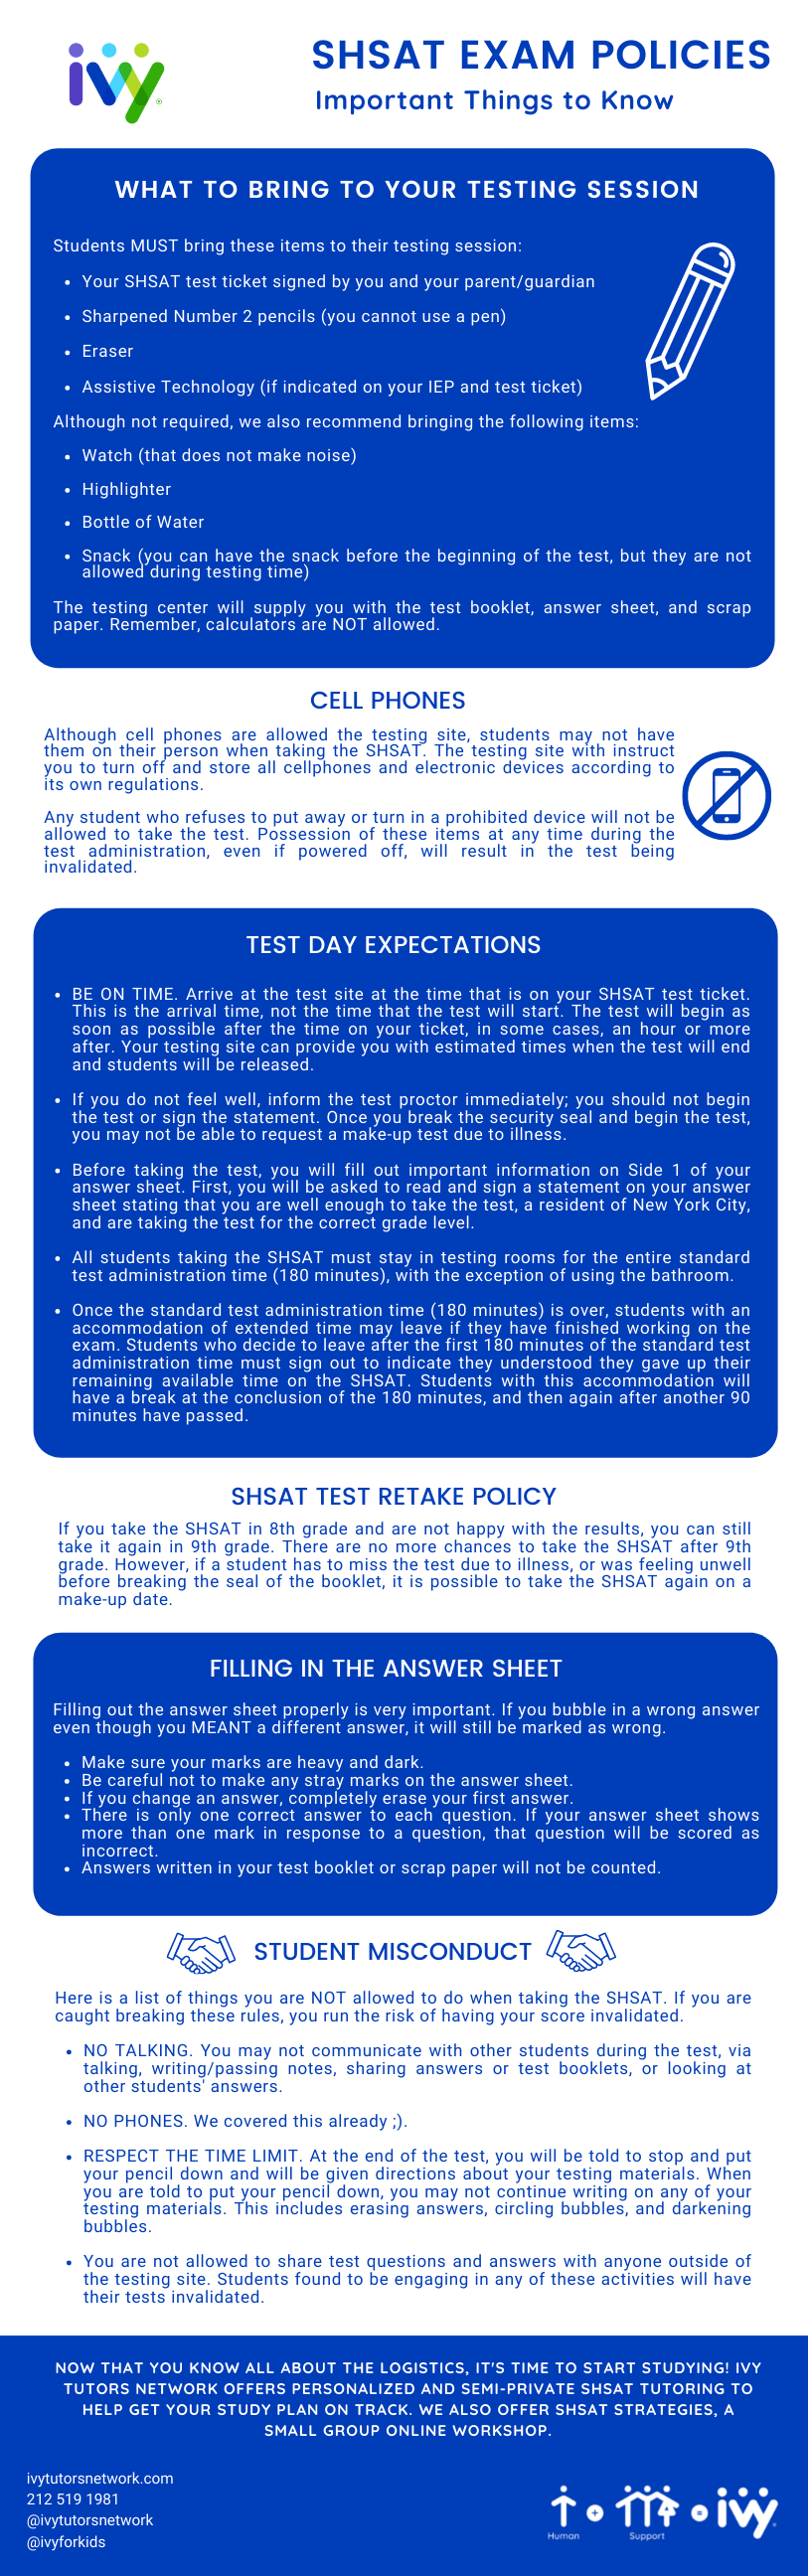 SHSAT Test Rules